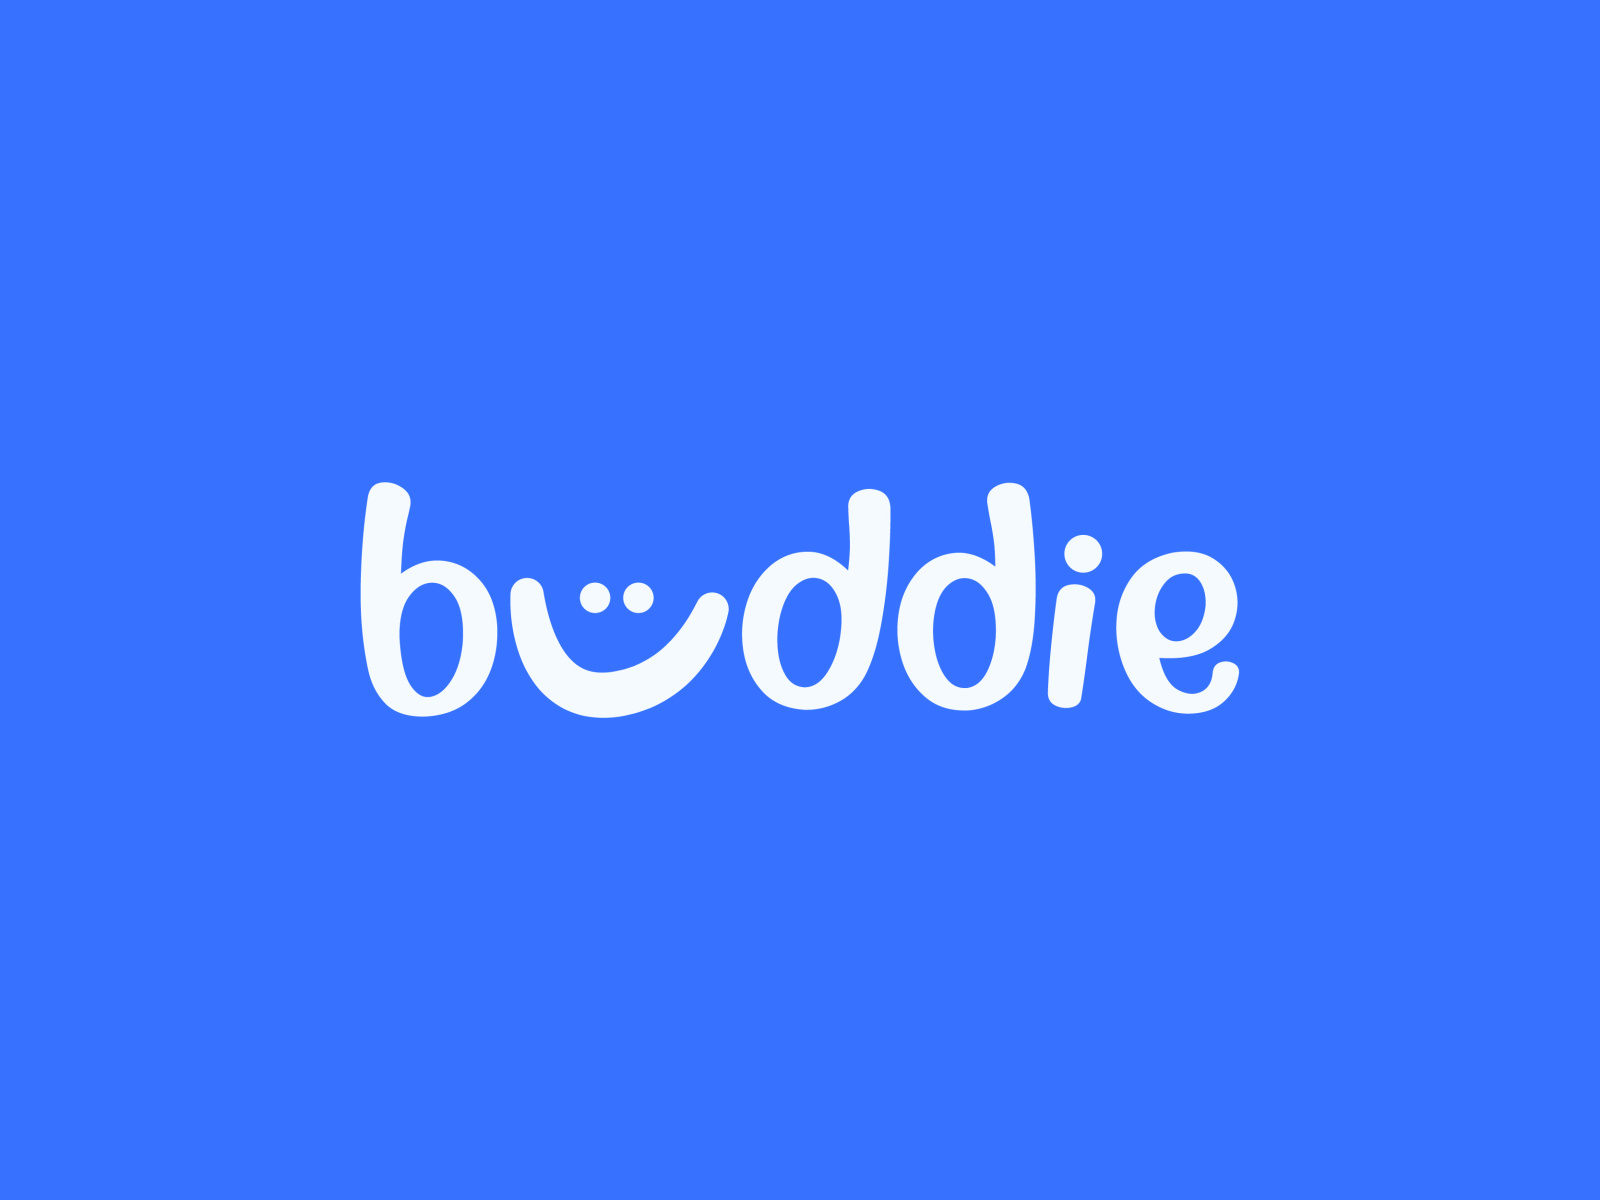 Buddie App Logo by Studio Joe | Joël Jansen on Dribbble